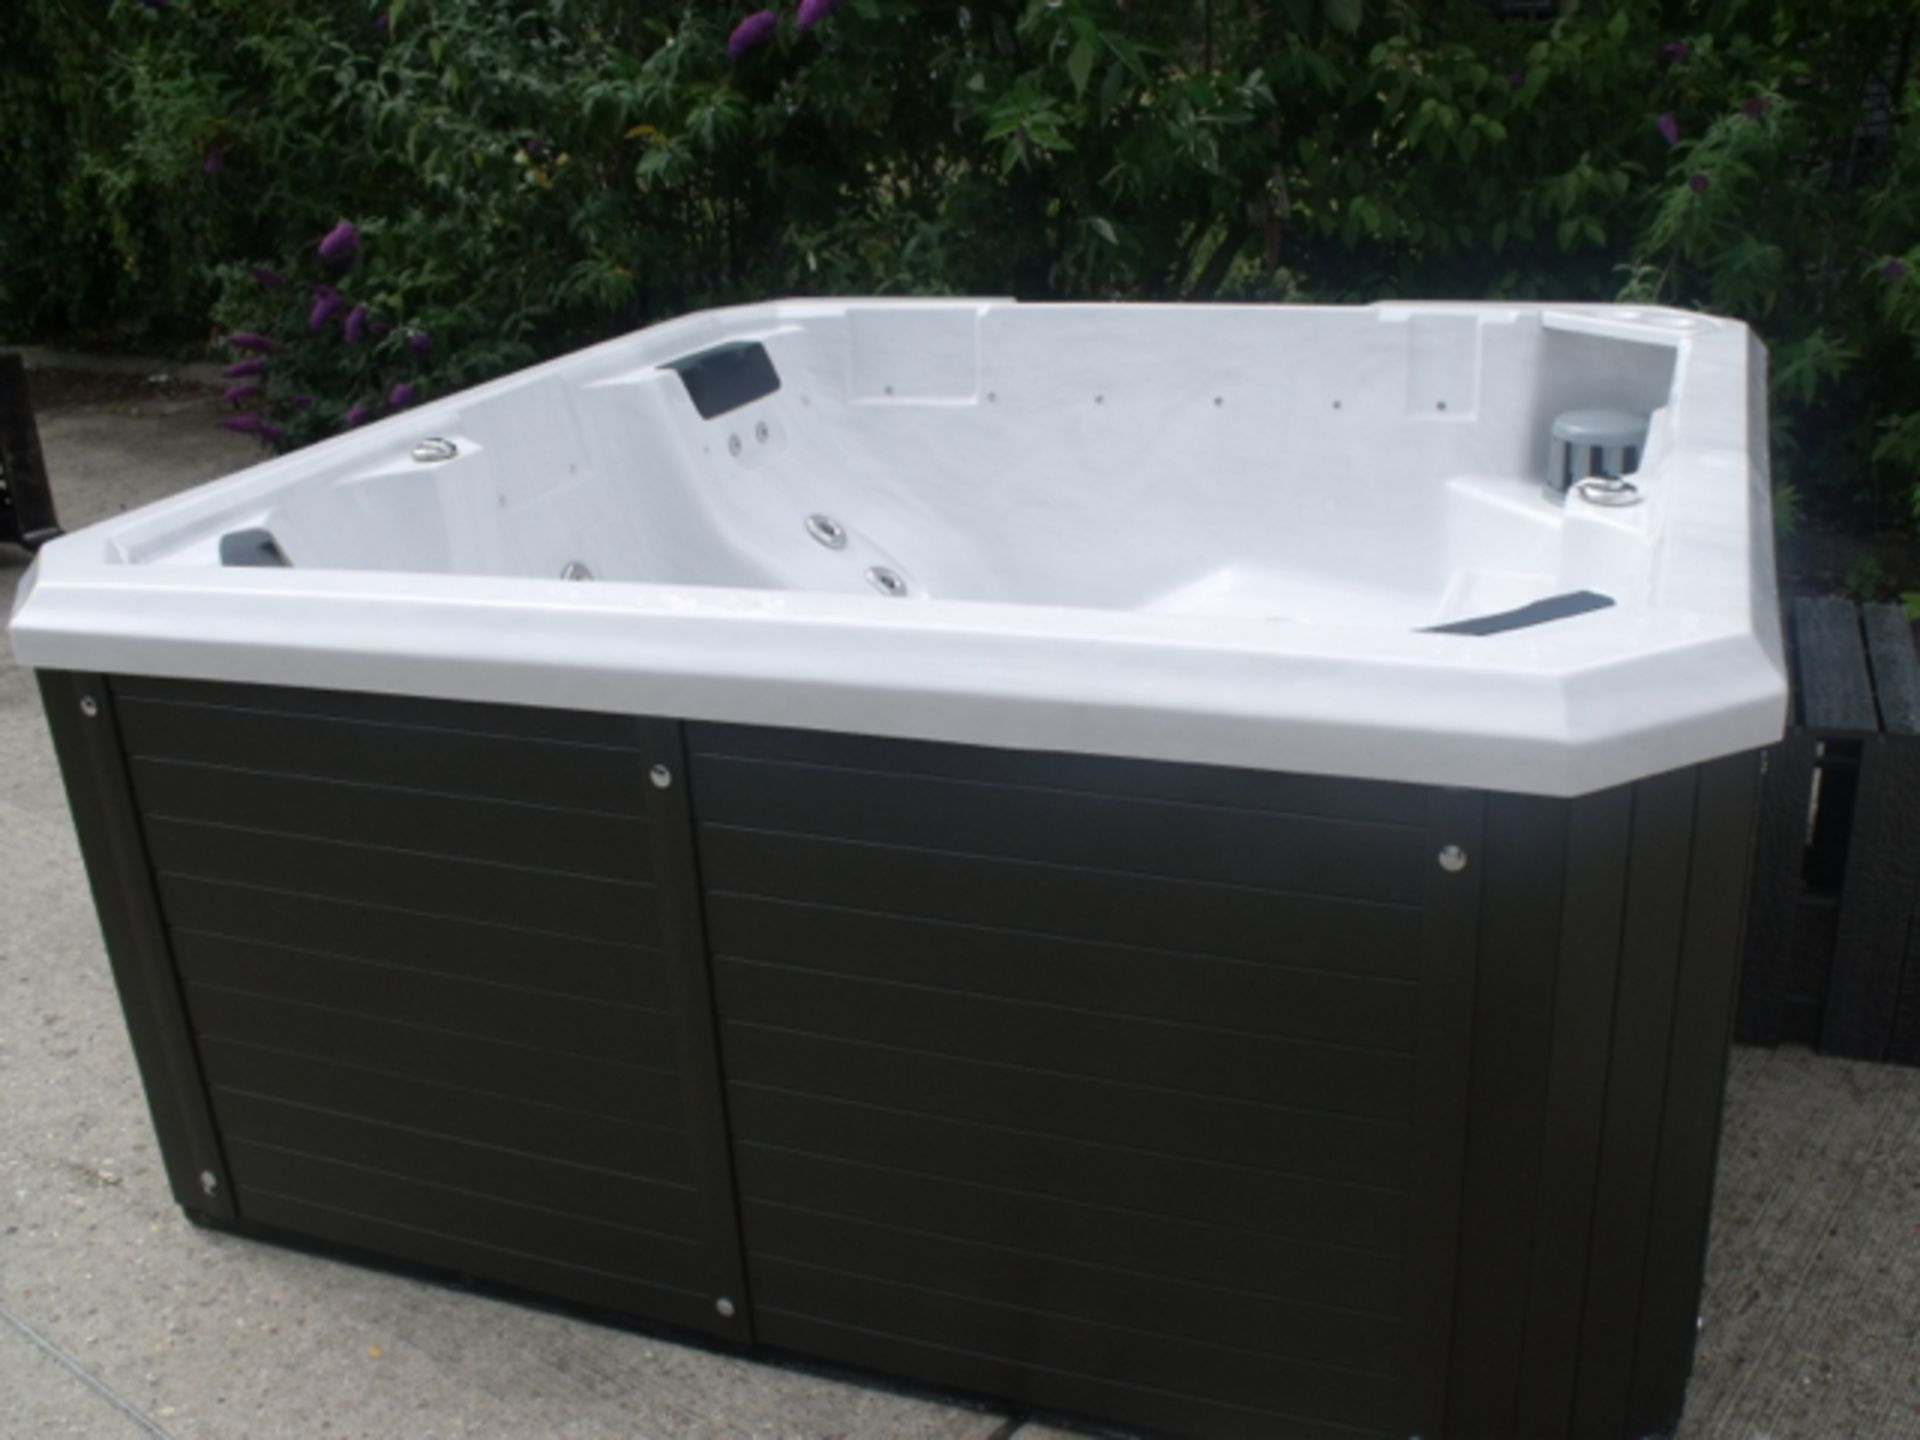 Brand New 2015 Executive Range Hot Tub.